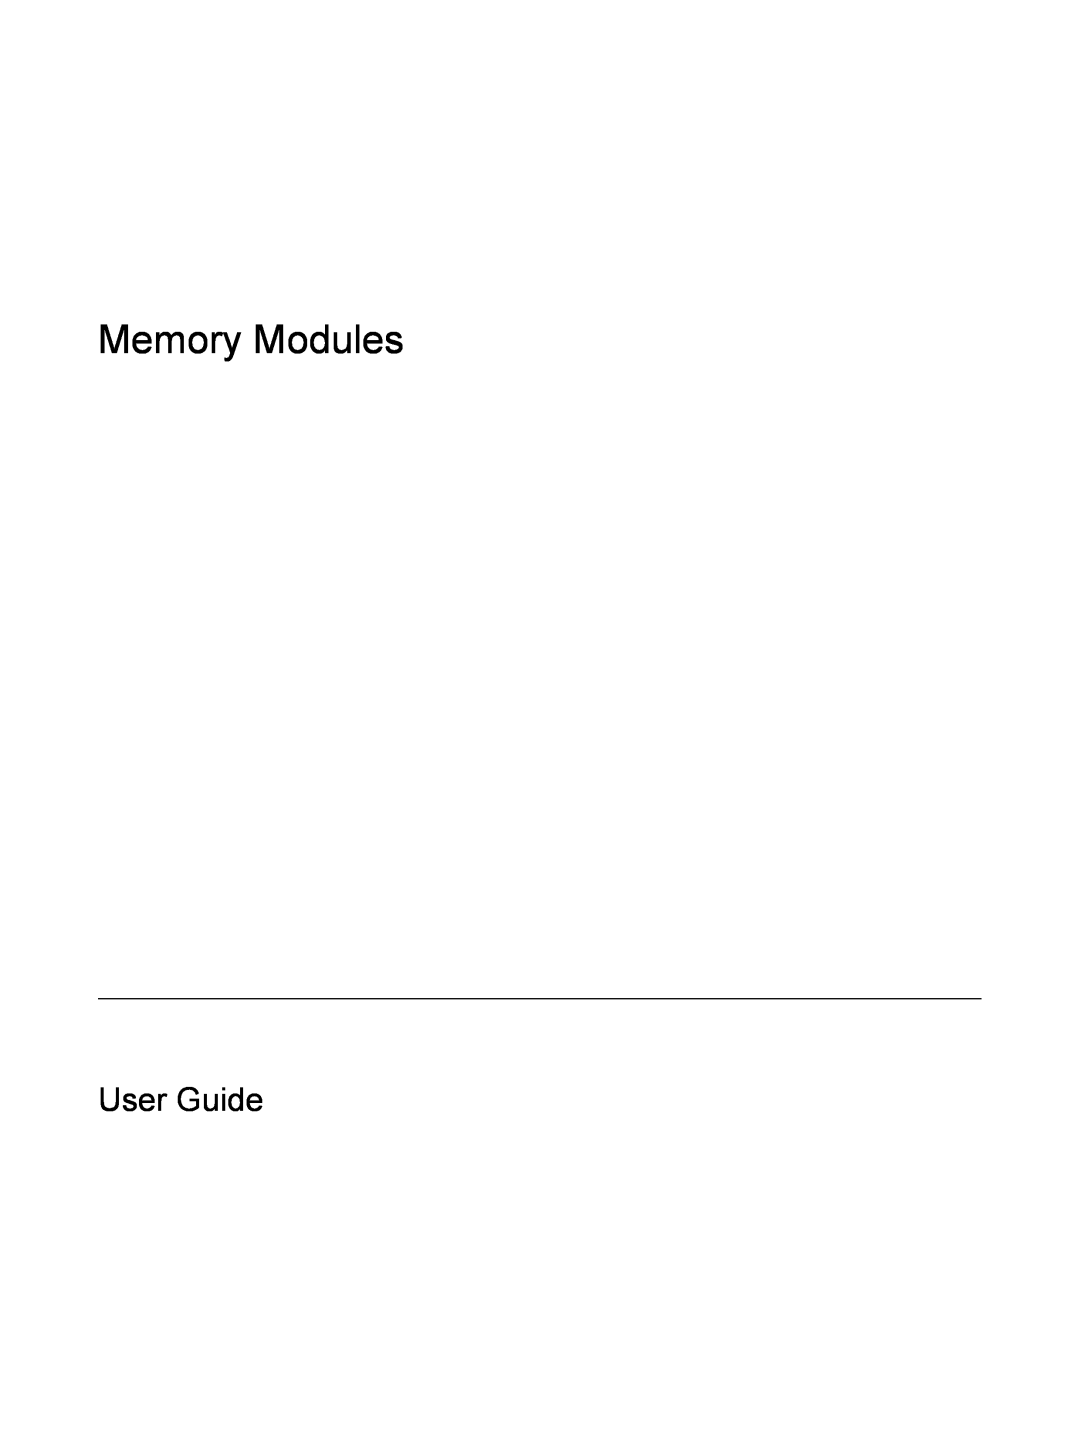 HP V6115EU, V6110CA, V6109OM, V6103NR, V6102XX, V6101US, V6101XX, V6101AU, V6112EU, V6139EU manual Memory Modules, User Guide 